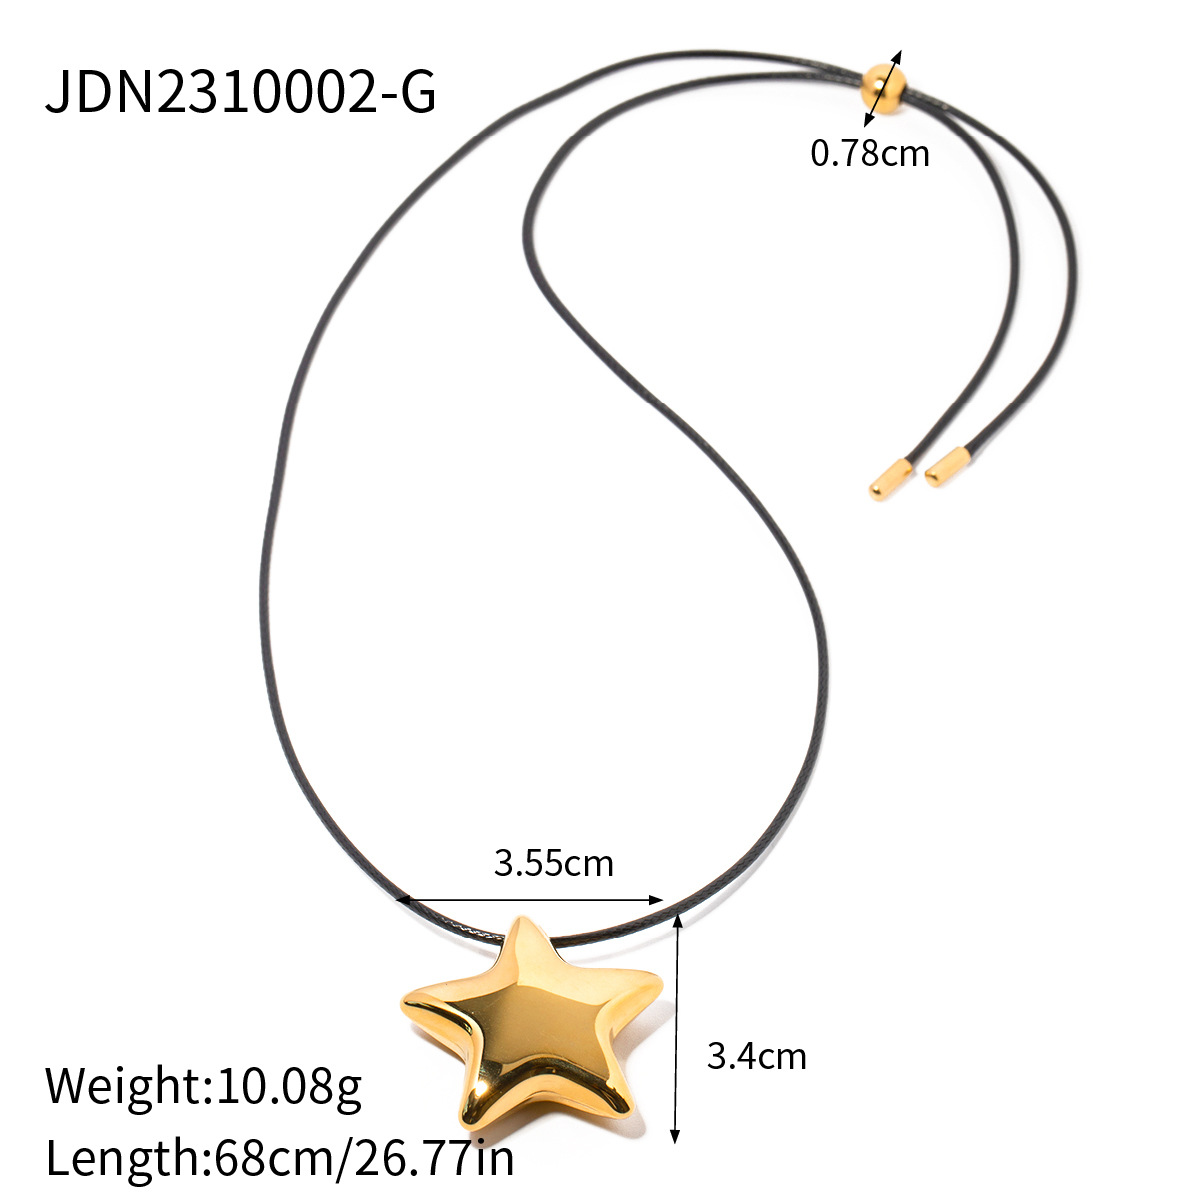 1:JDN2310002-G